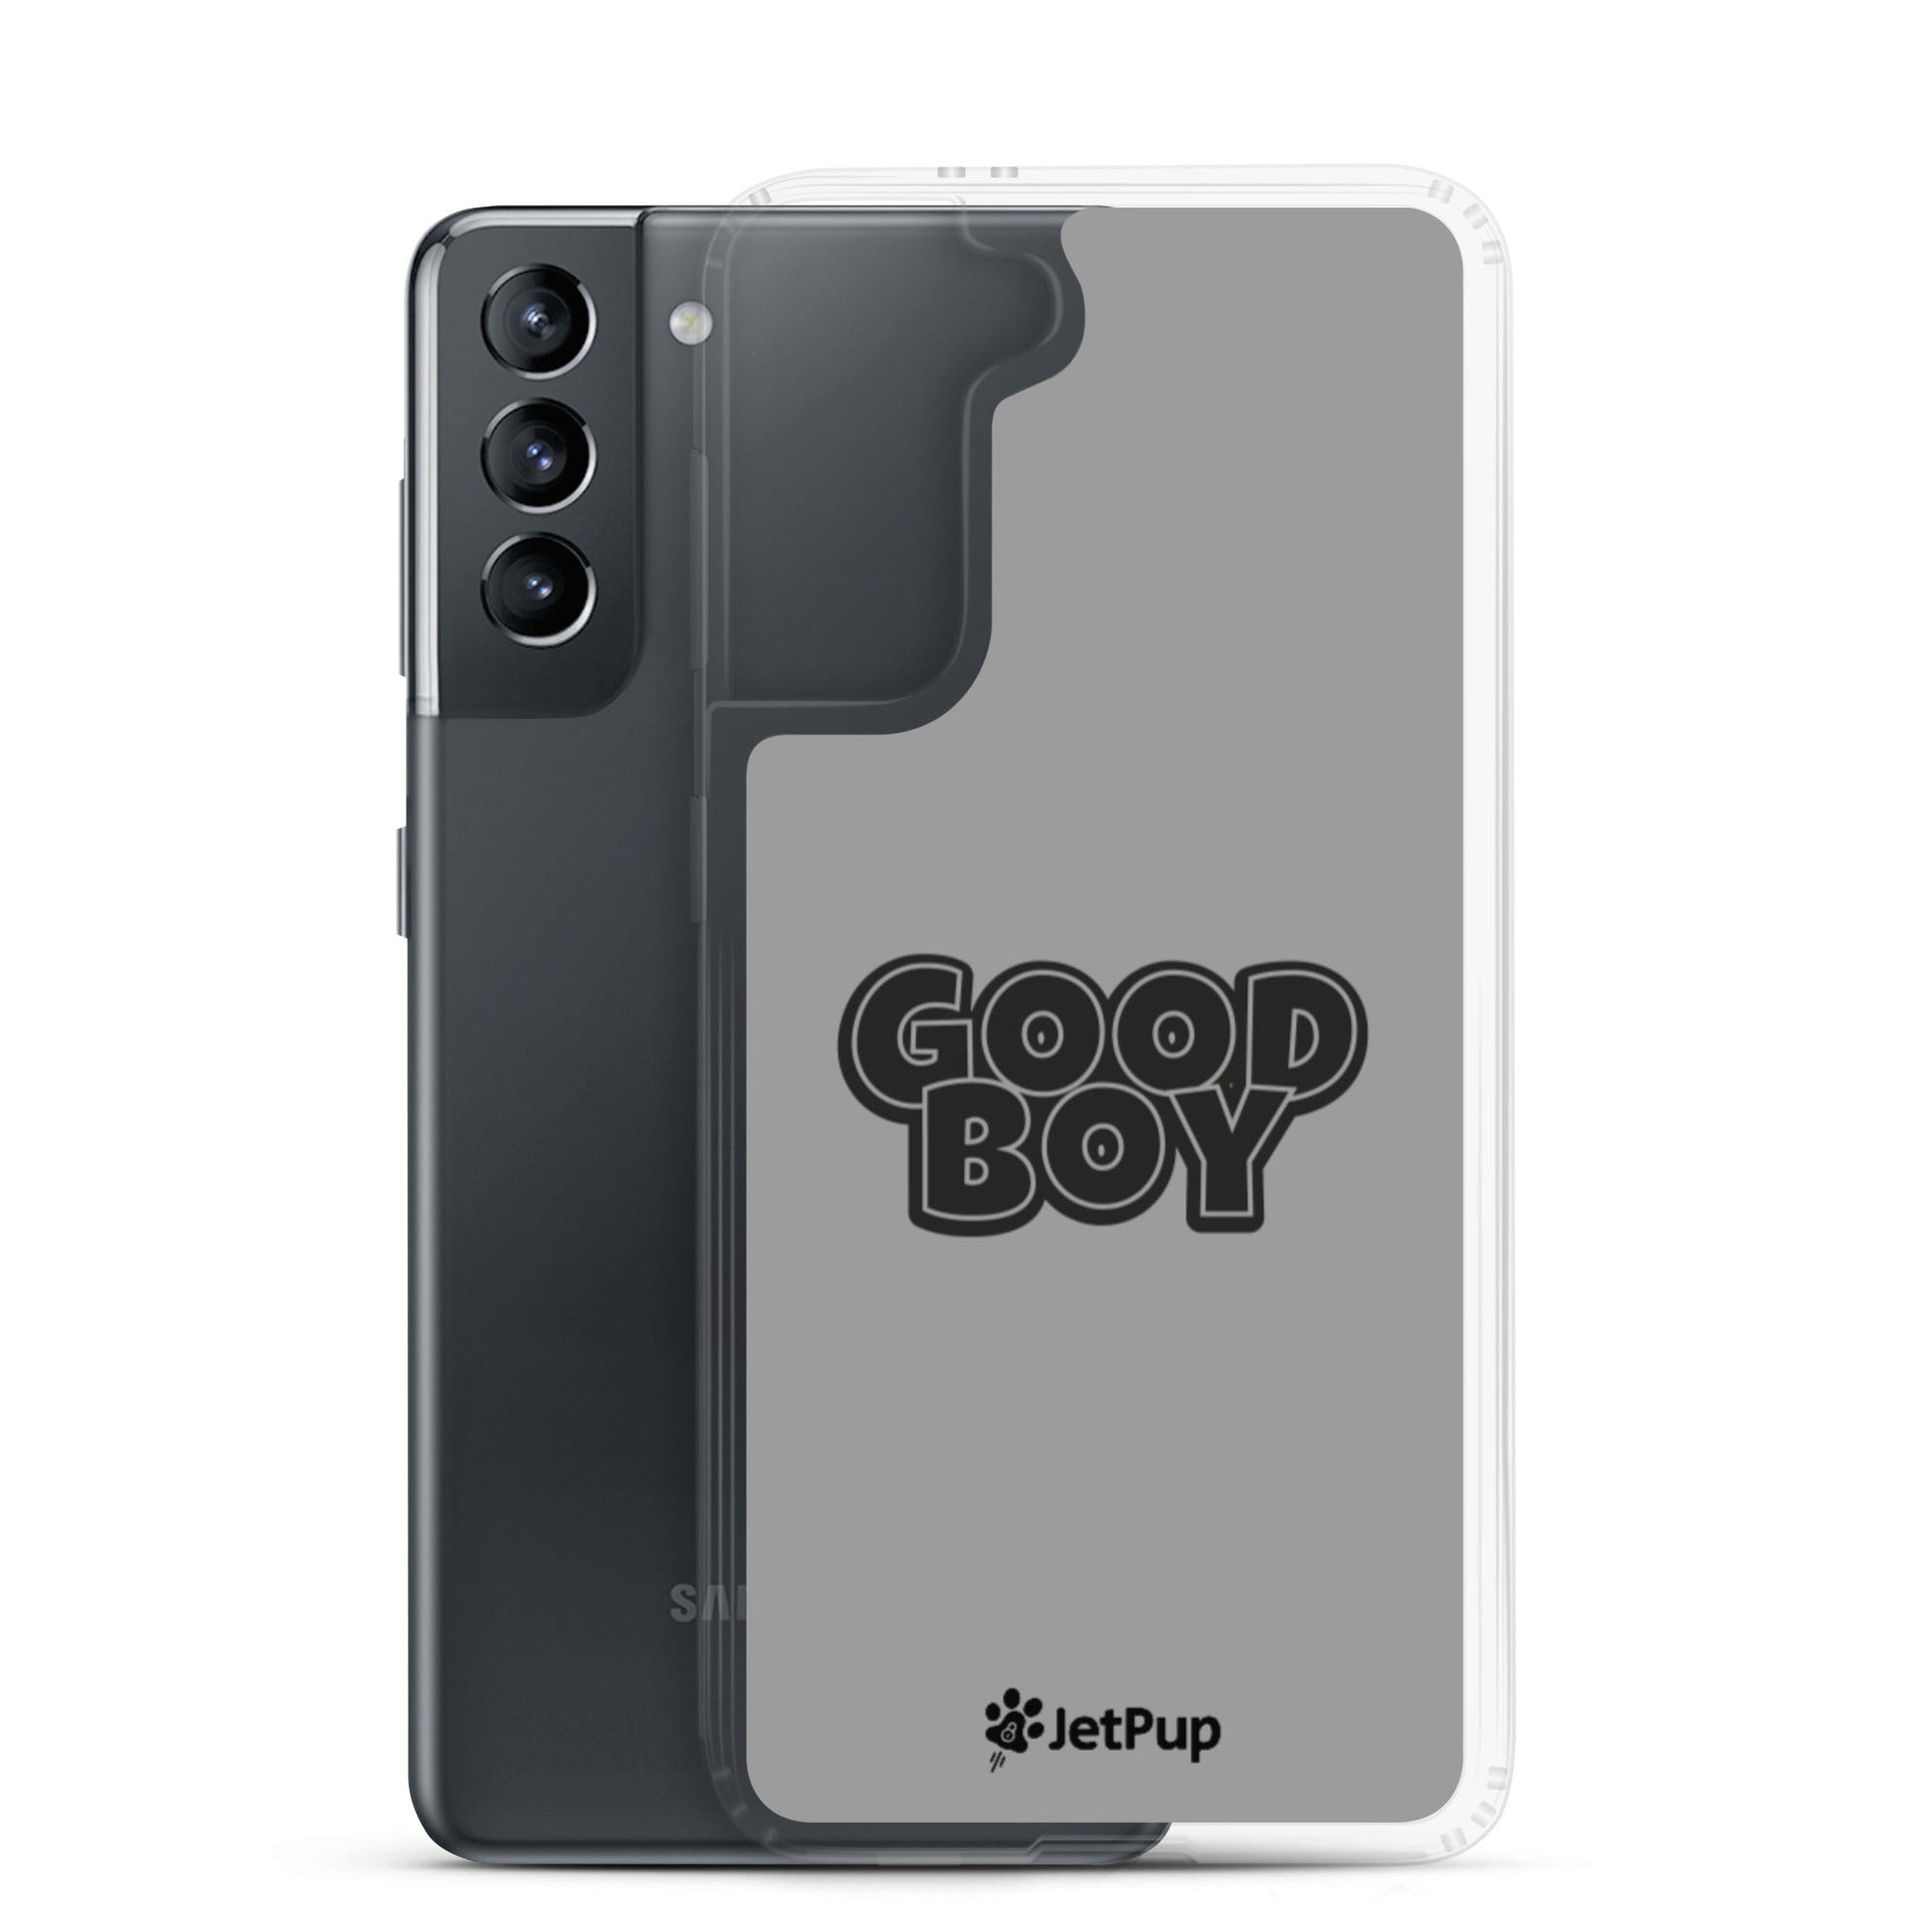 Good Boy Samsung Case - Grey - JetPup